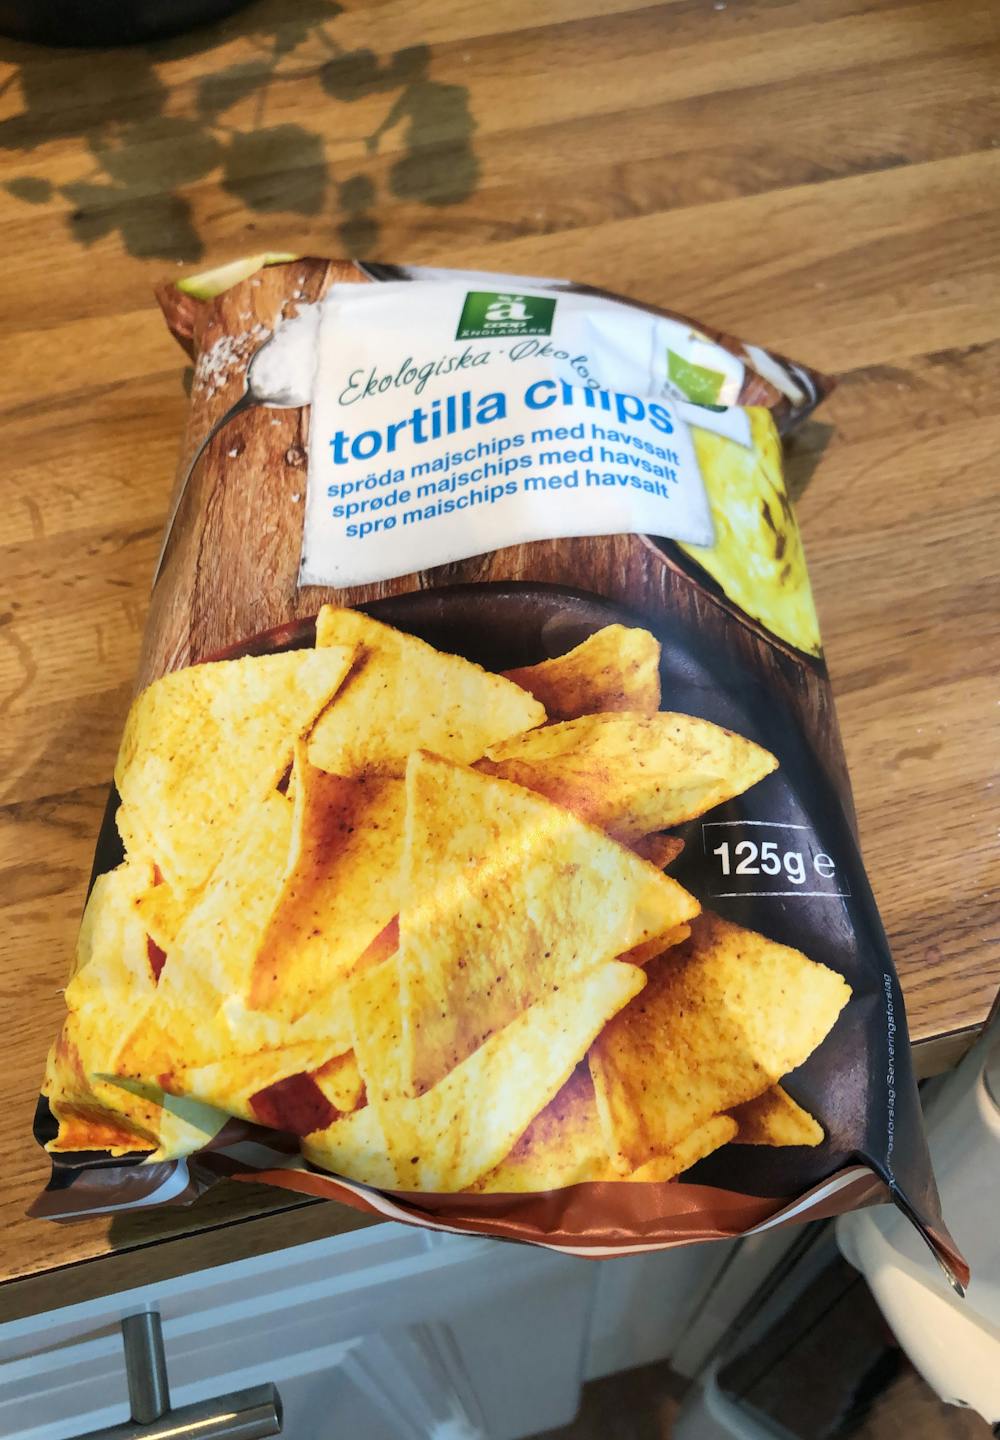 Tortilla chips, Coop änglamark